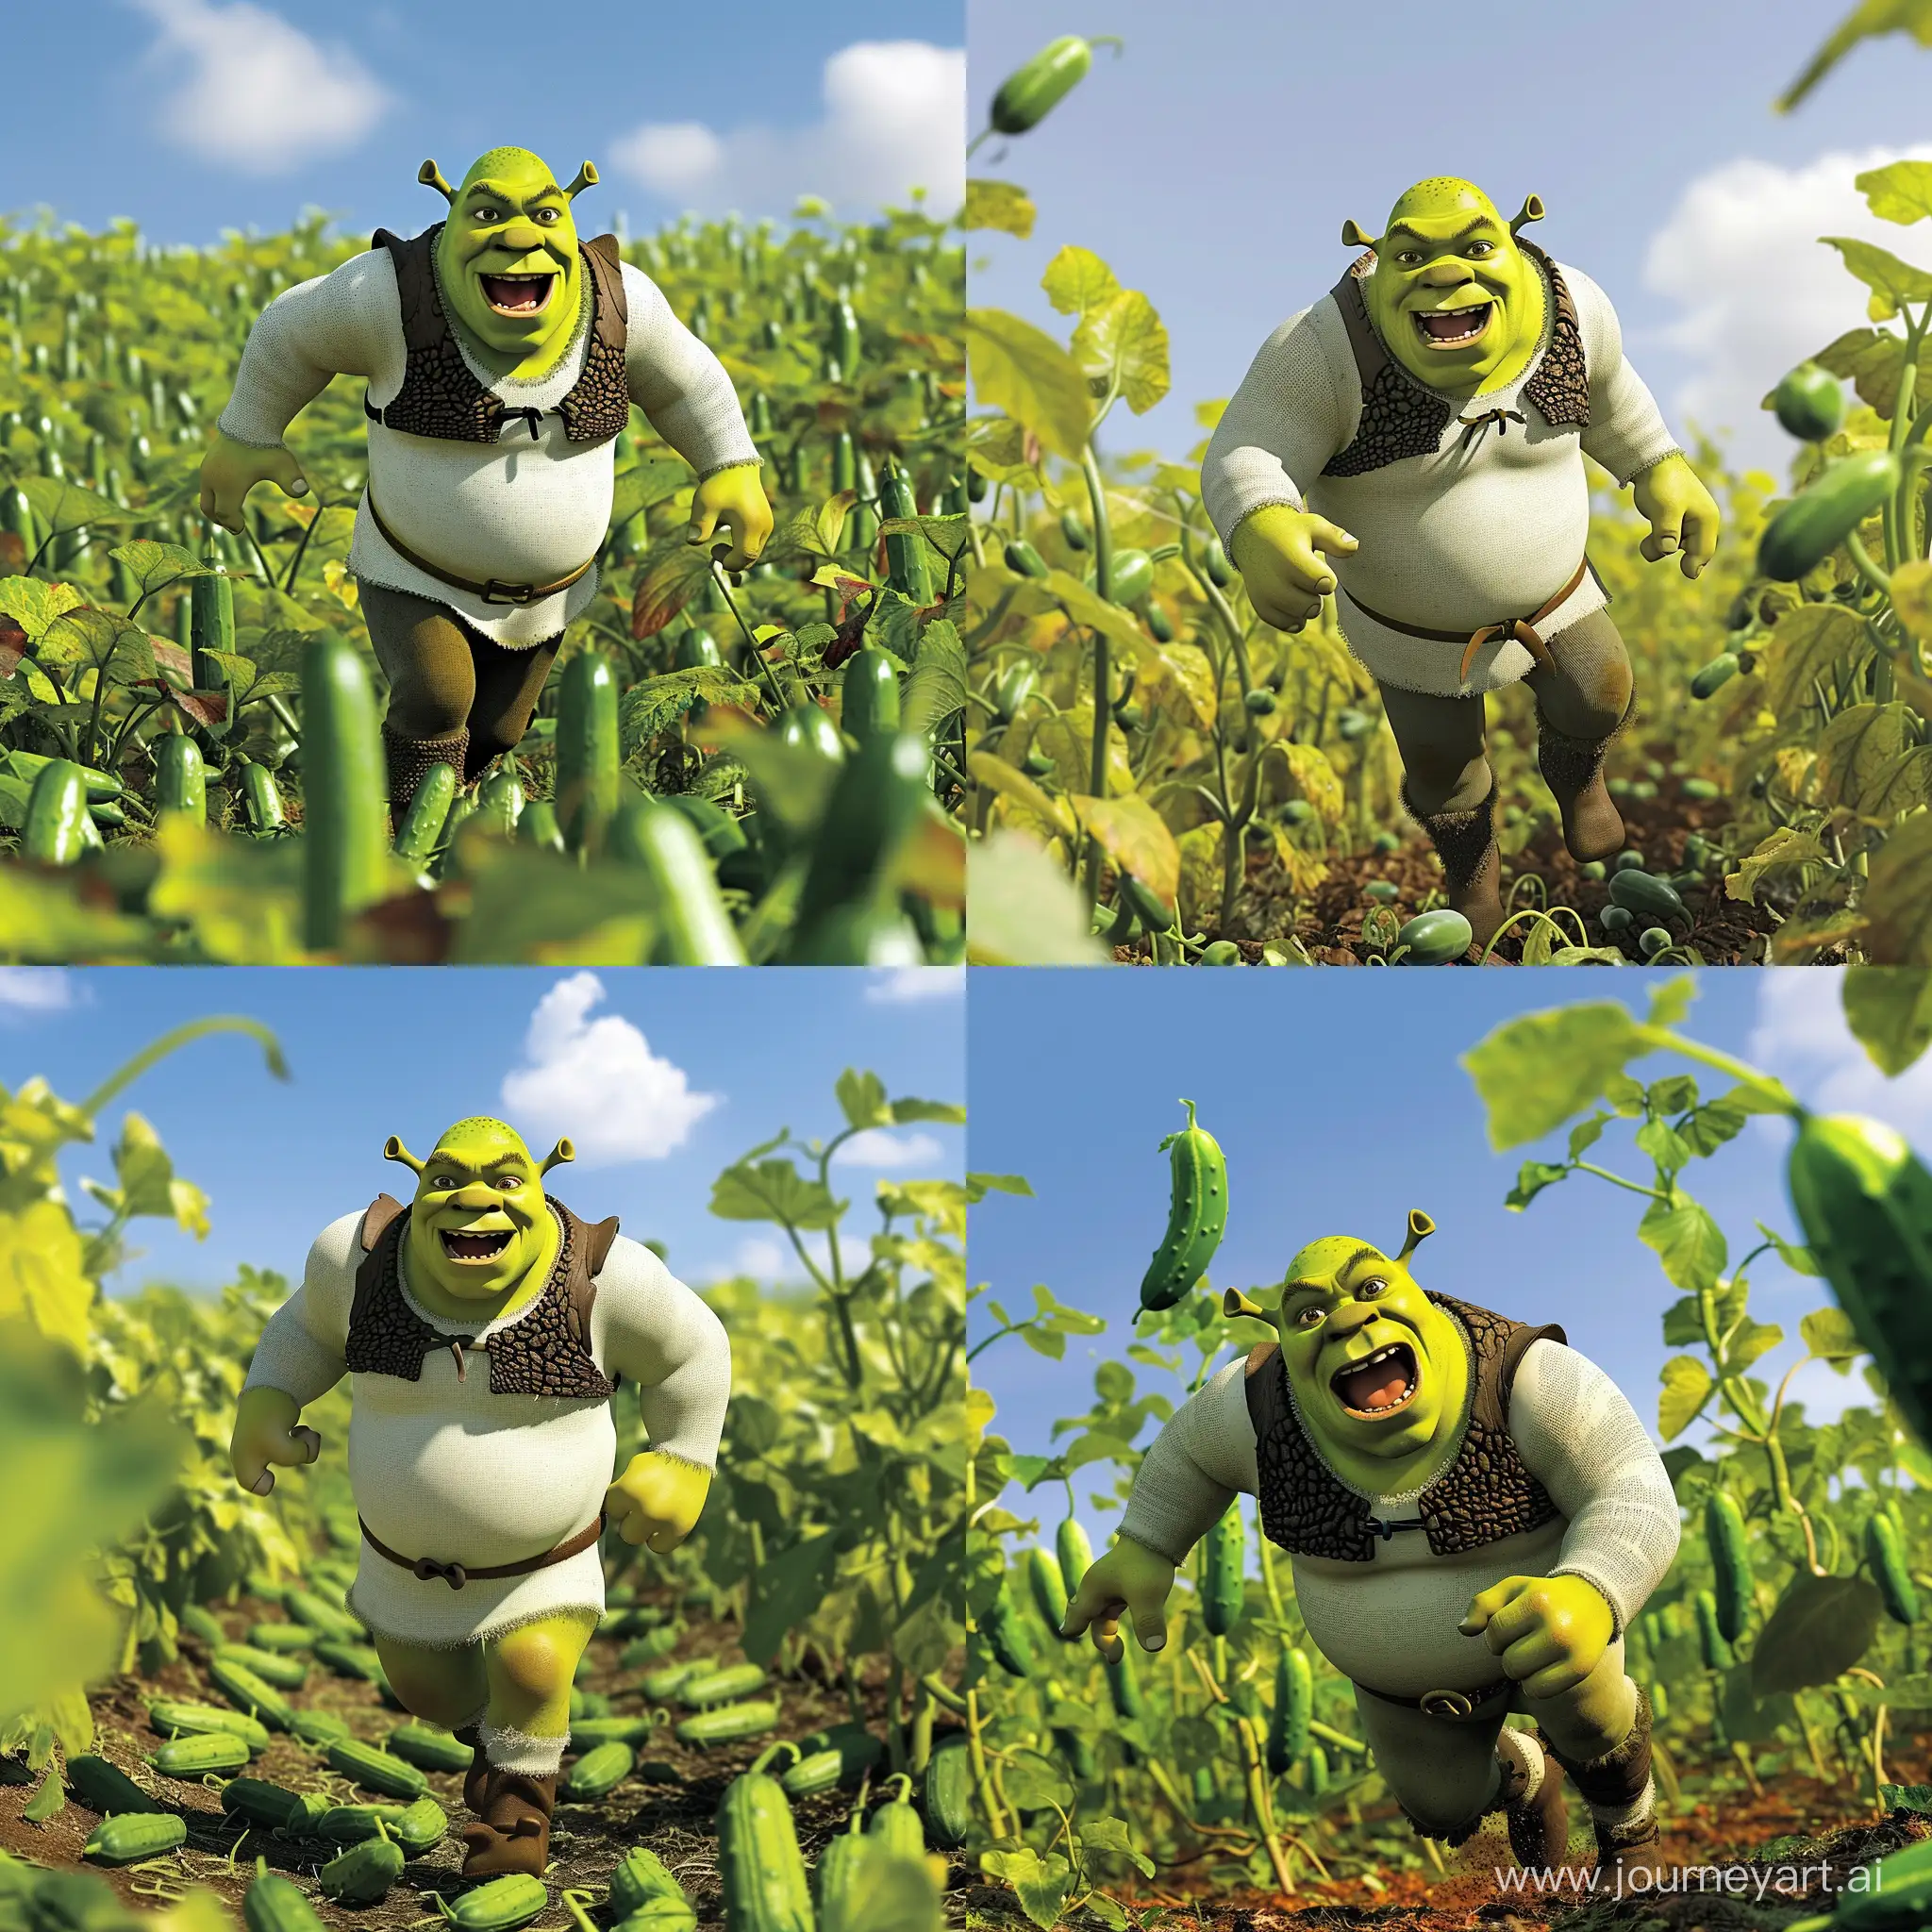 Shrek-Playfully-Dashes-Through-a-Lush-Cucumber-Field